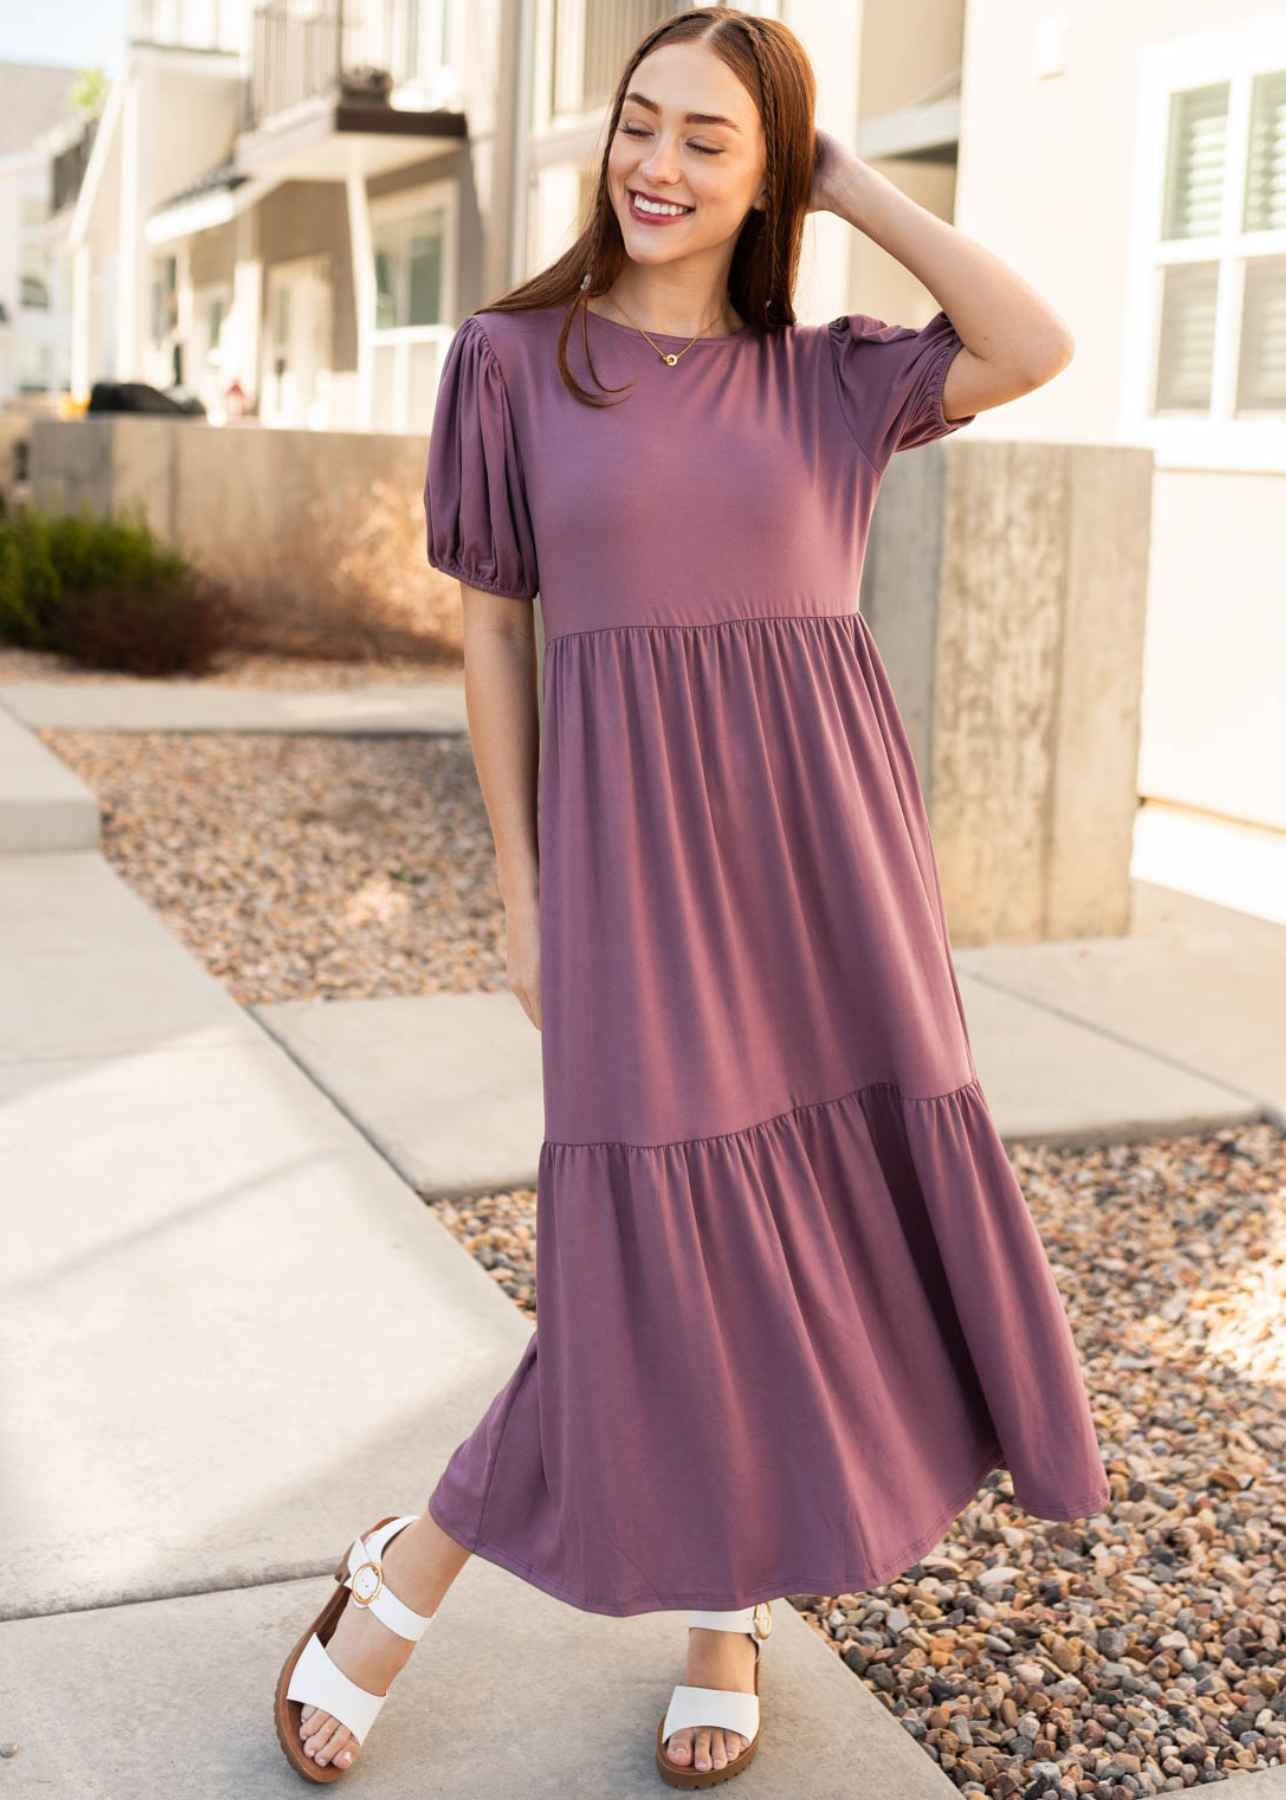 Short sleeve lavender tiered dress